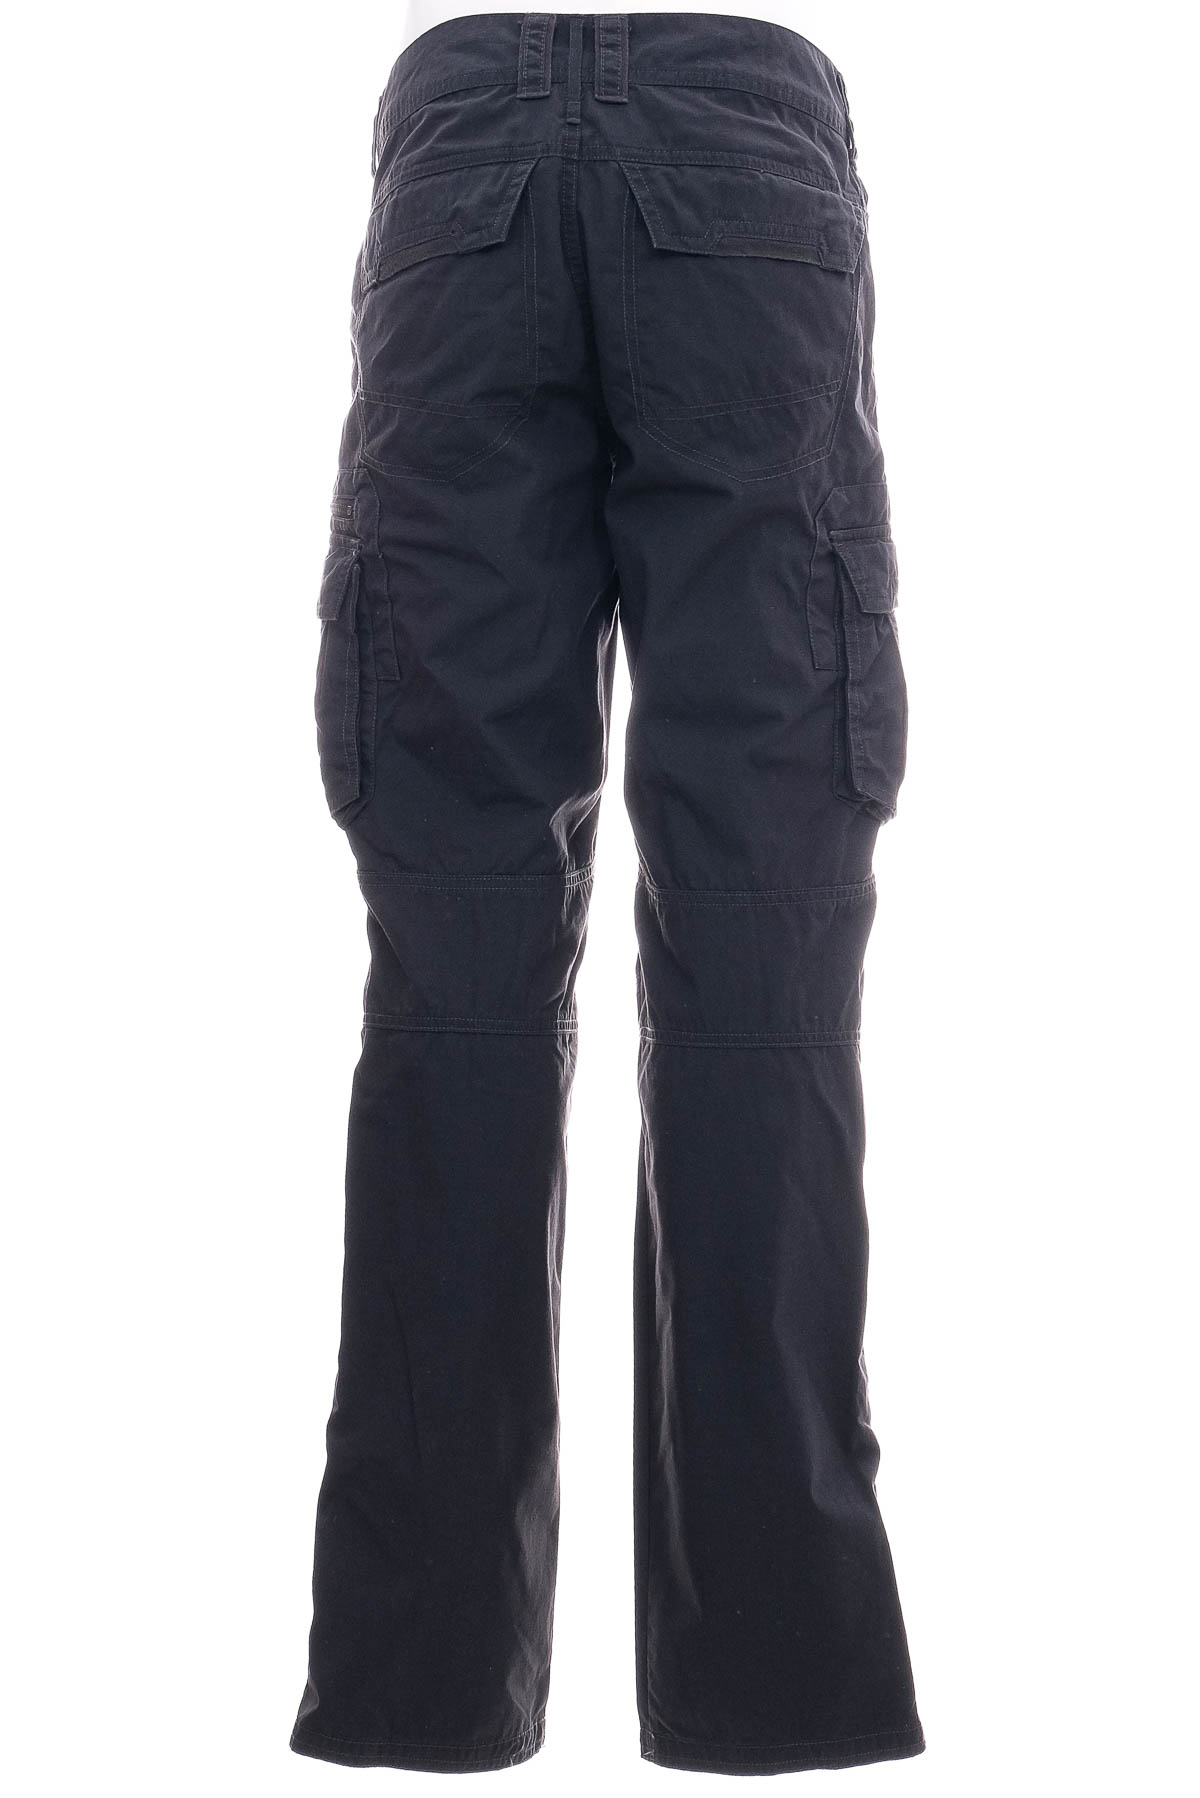 Pantalon pentru bărbați - Decathlon - 1